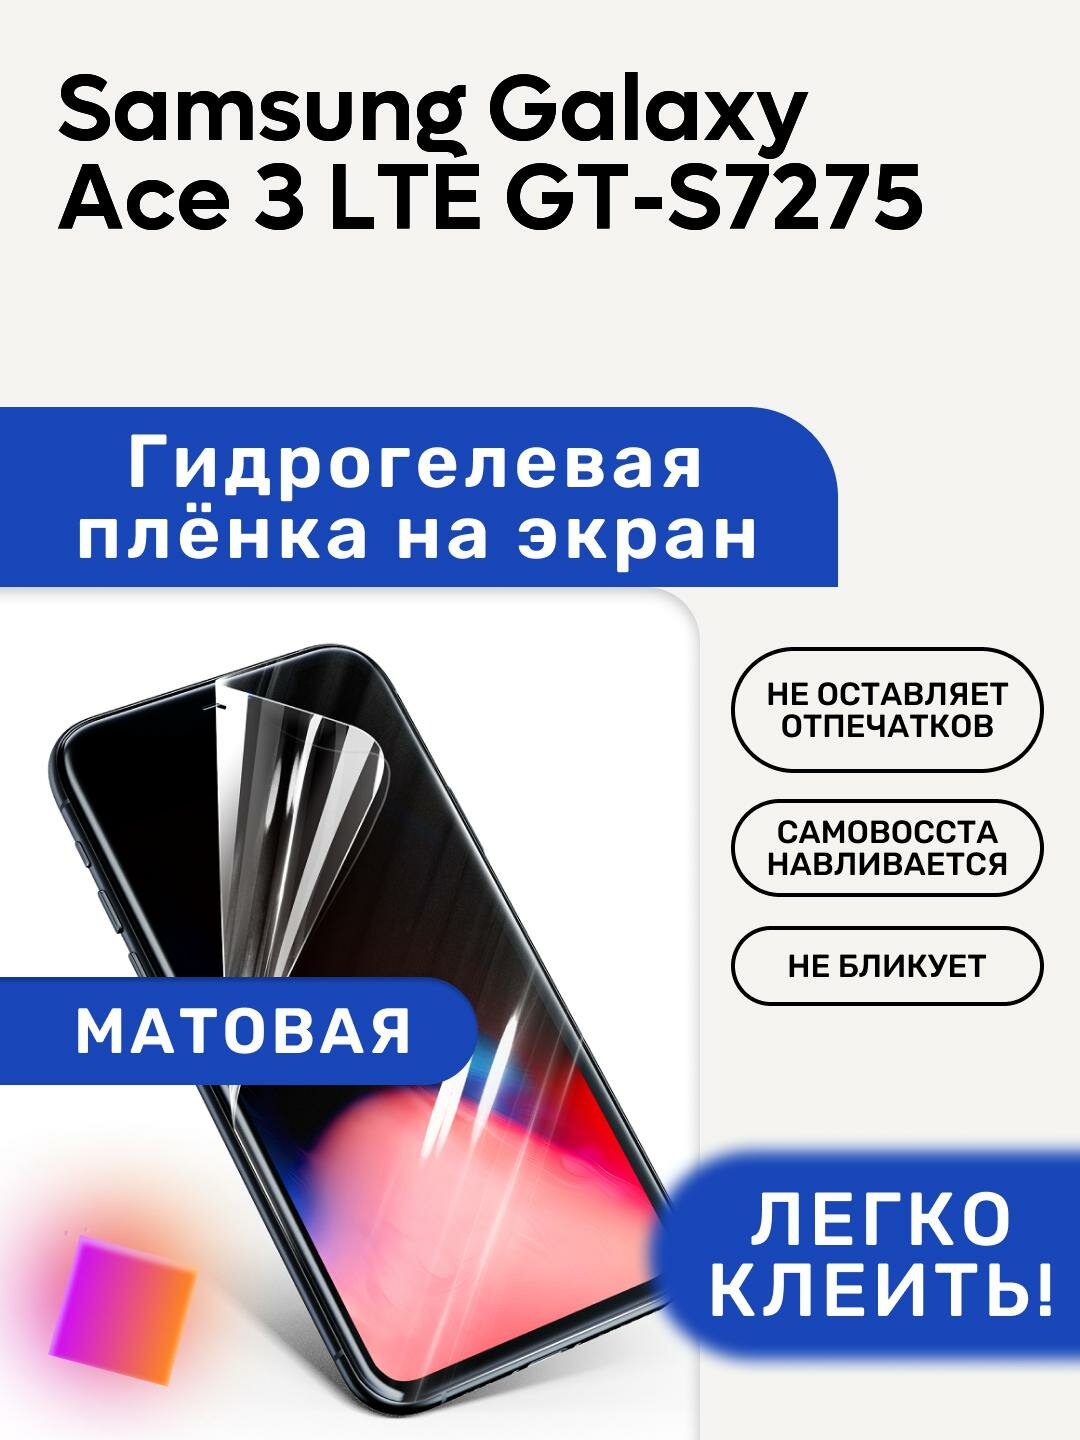 Матовая Гидрогелевая плёнка, полиуретановая, защита экрана Samsung Galaxy Ace 3 LTE GT-S7275